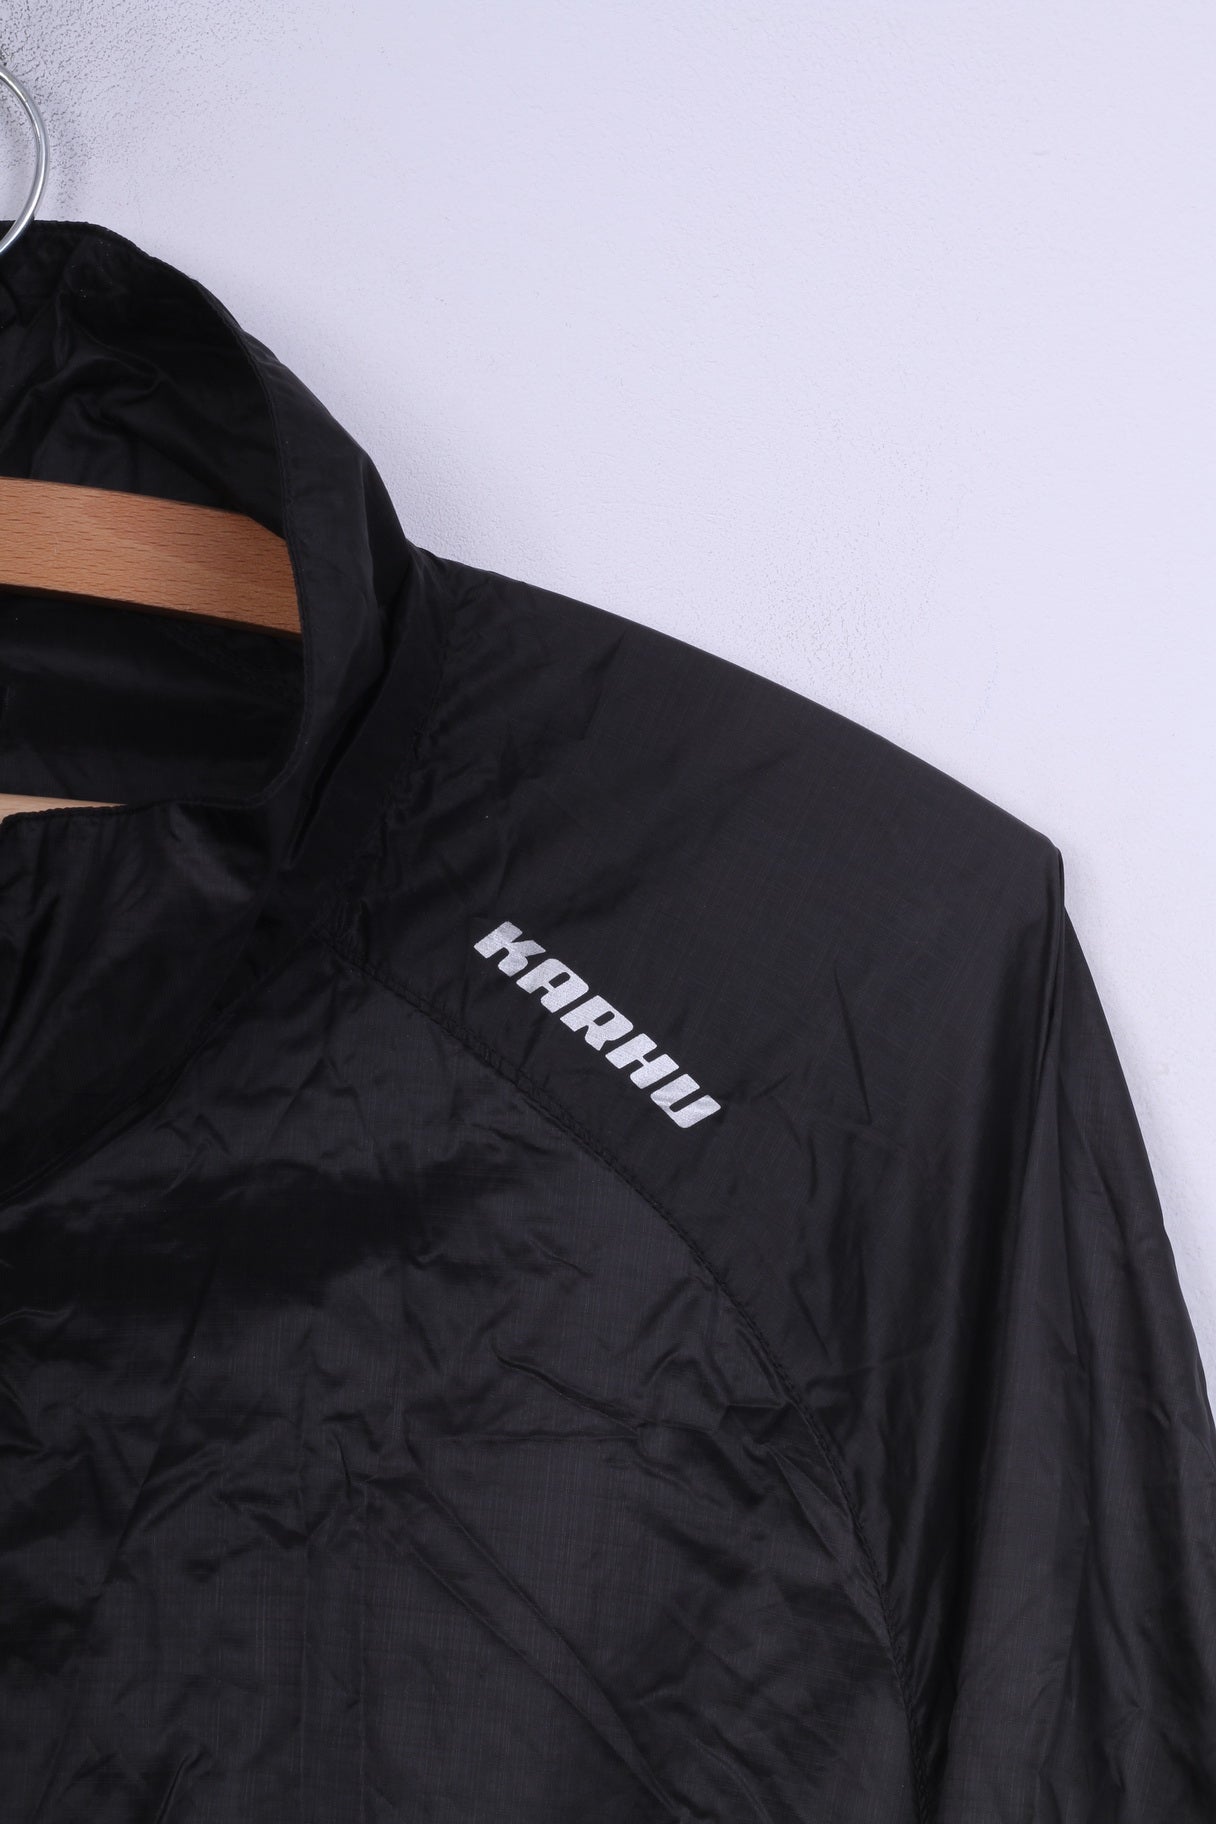 Karhu Mens L Jacket Full Zipper Black Nylon Waterproof Lightweight